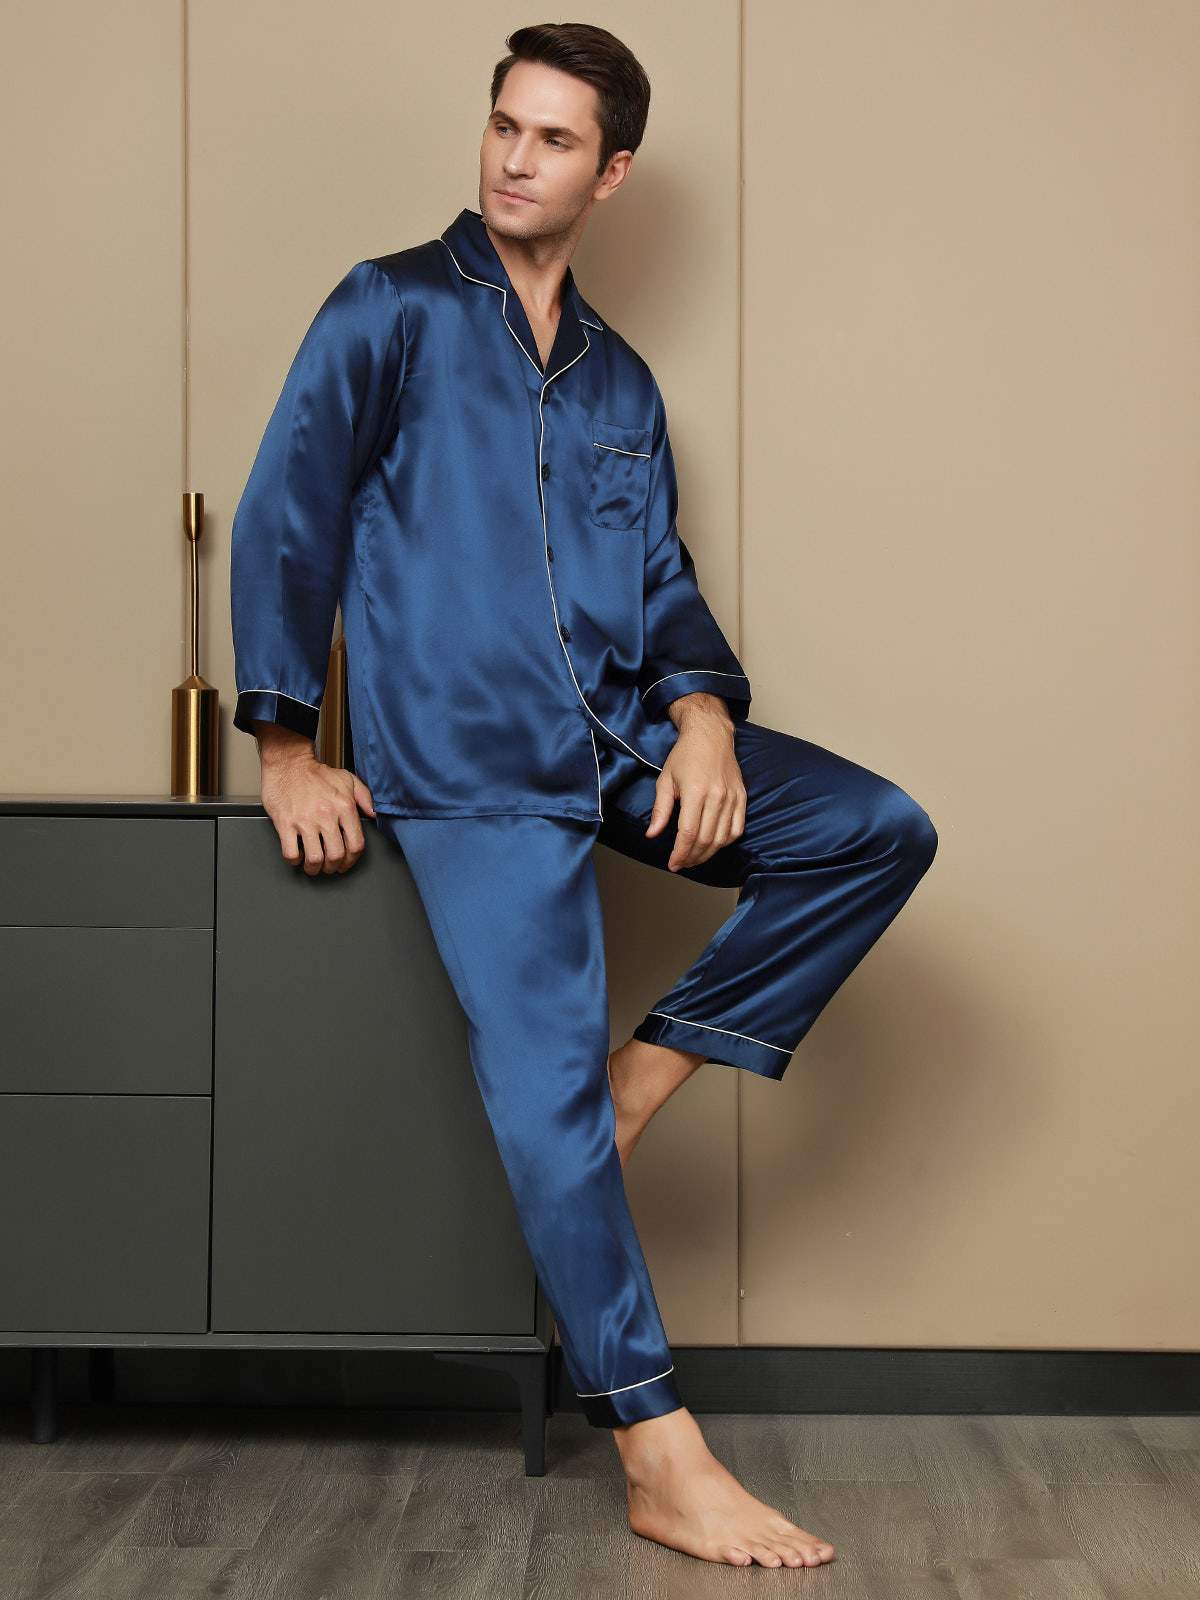 Black Classic Silk Pajama Set for Women Luxury Silk Sleepwear 100% Sil